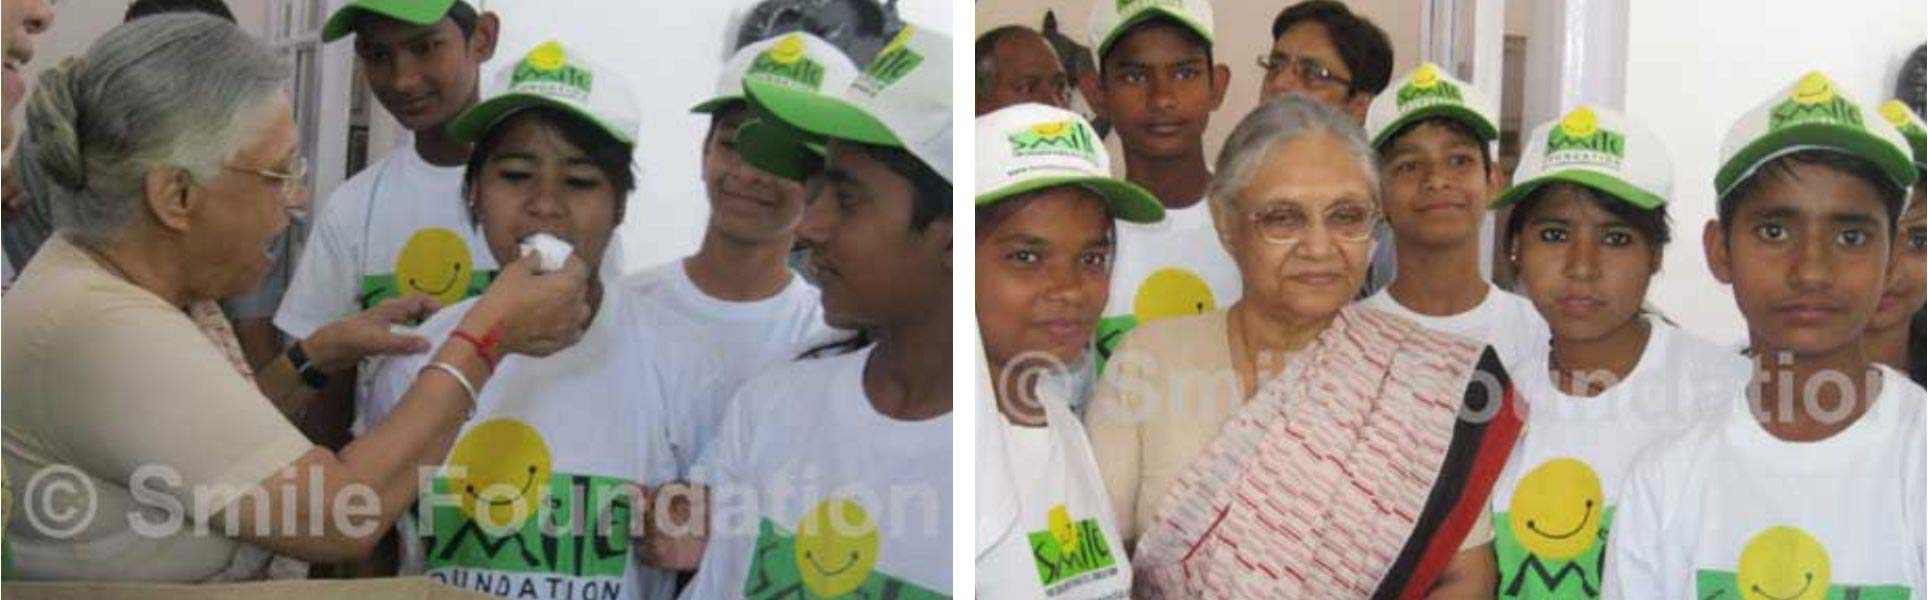 Delhi CM Sheila Dikshit spends World Literacy Day with Smile kids